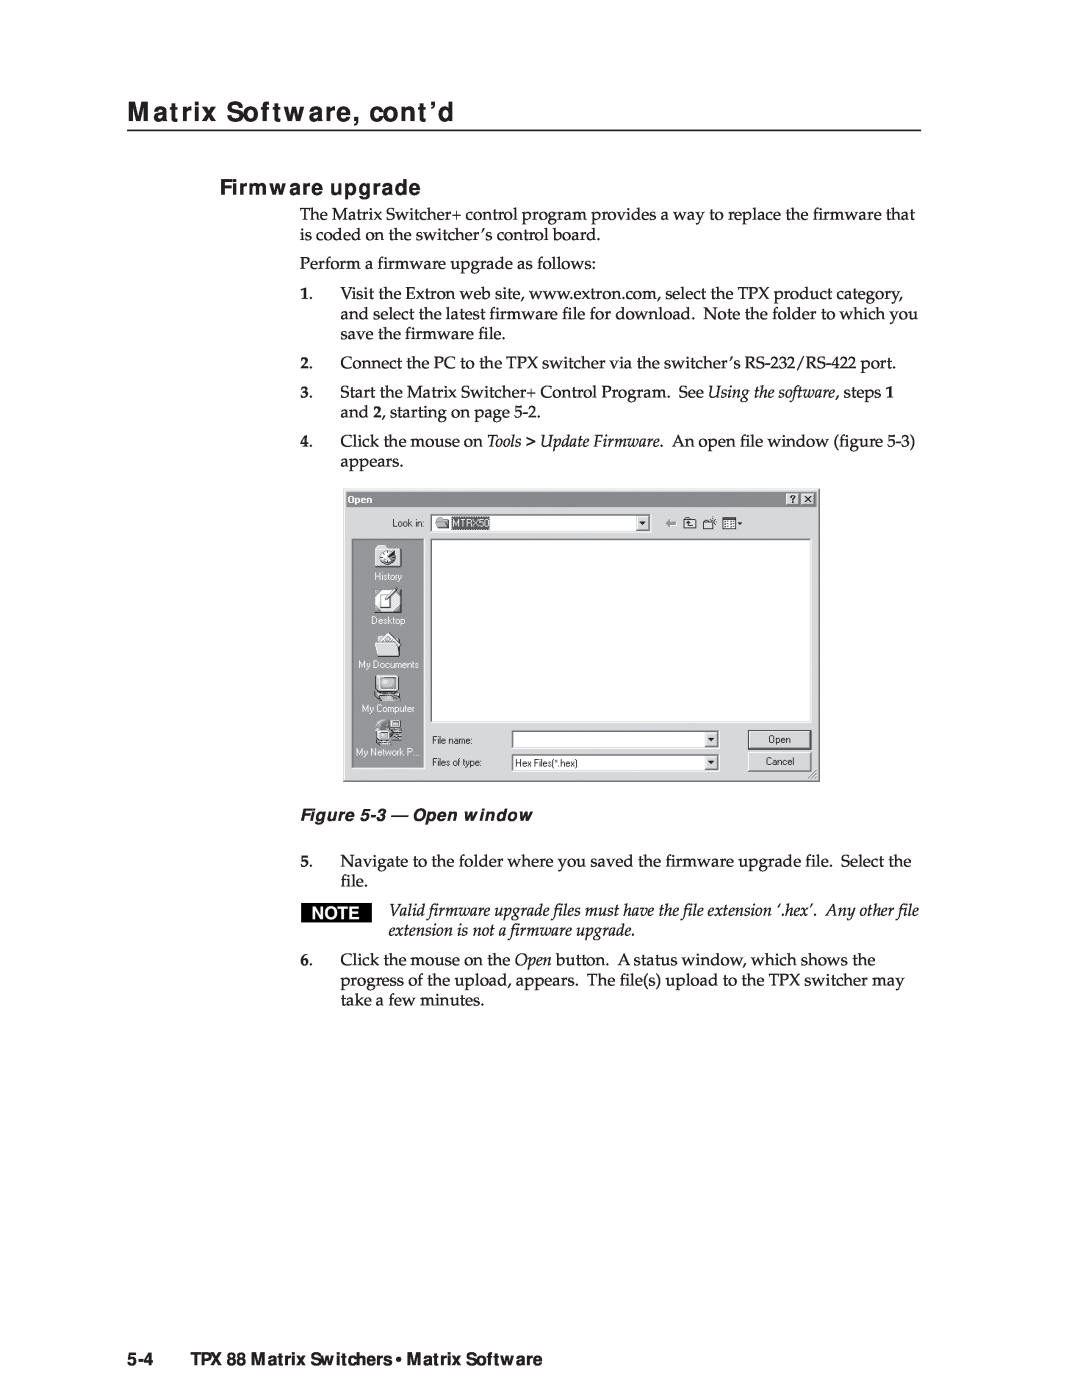 Extron electronic TPX 88 A manual Matrix Software, cont’d, Firmware upgrade, 3 - Open window 